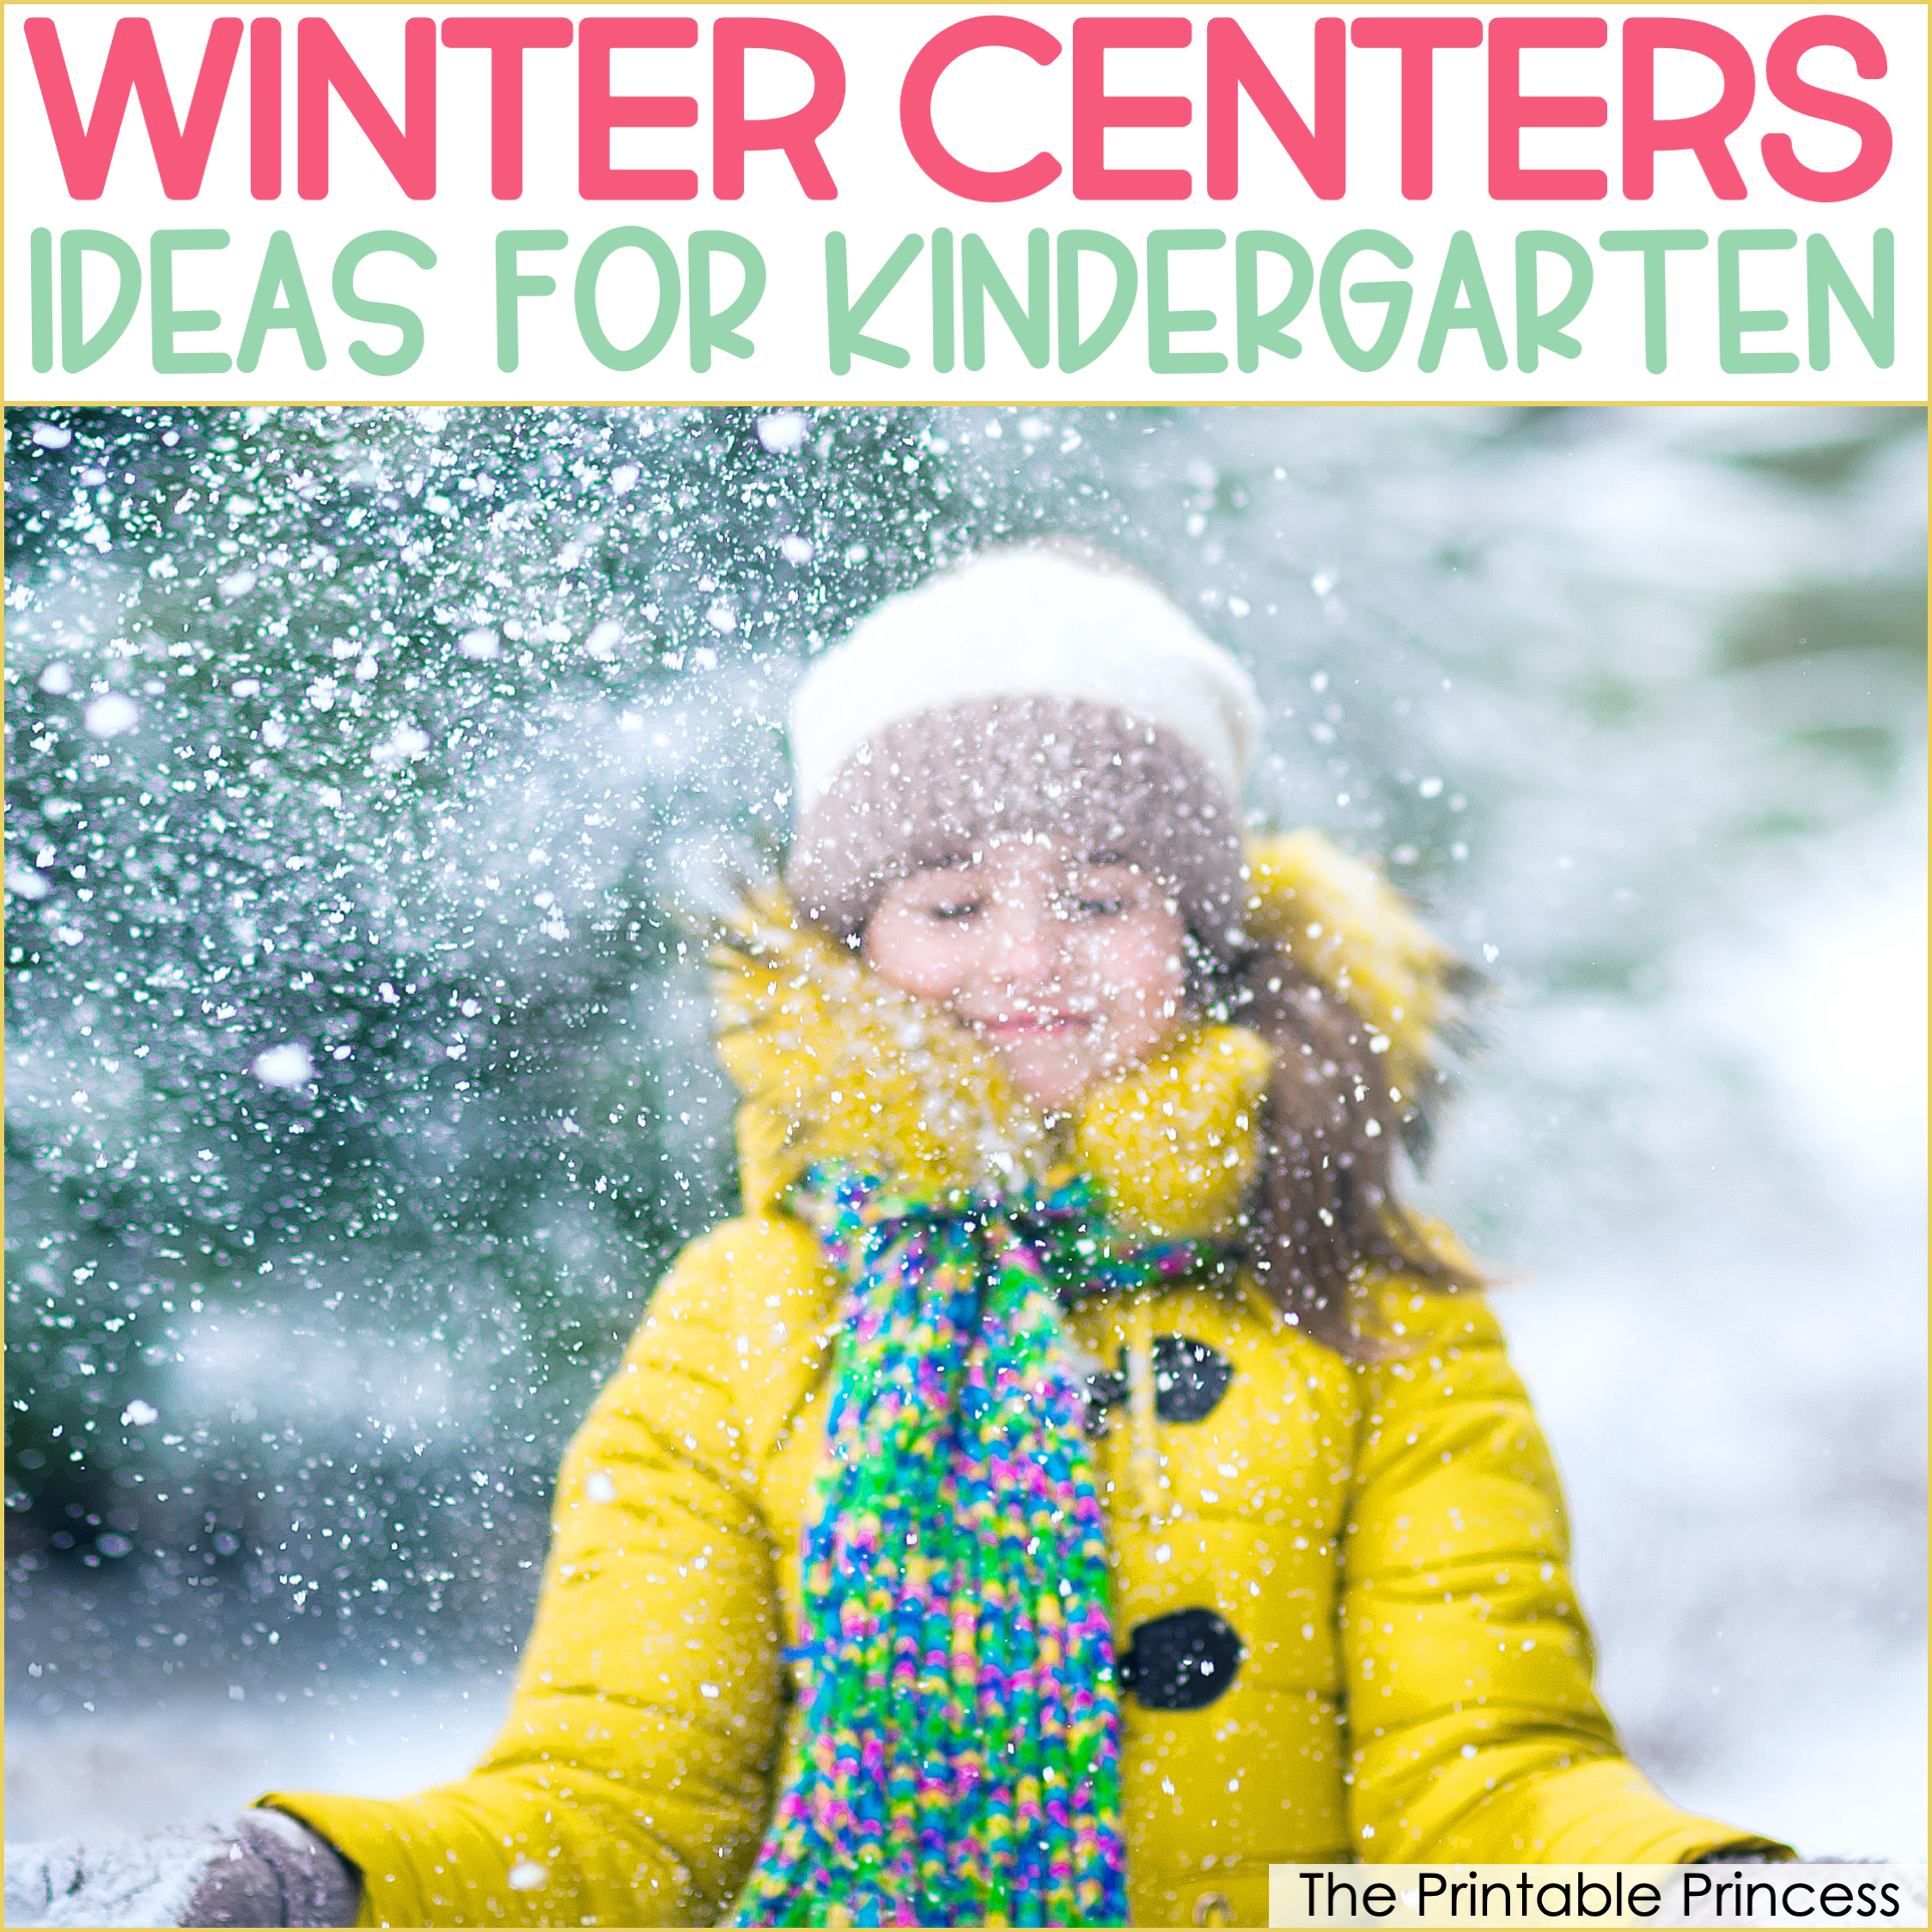 Winter Center Ideas for Kindergarten